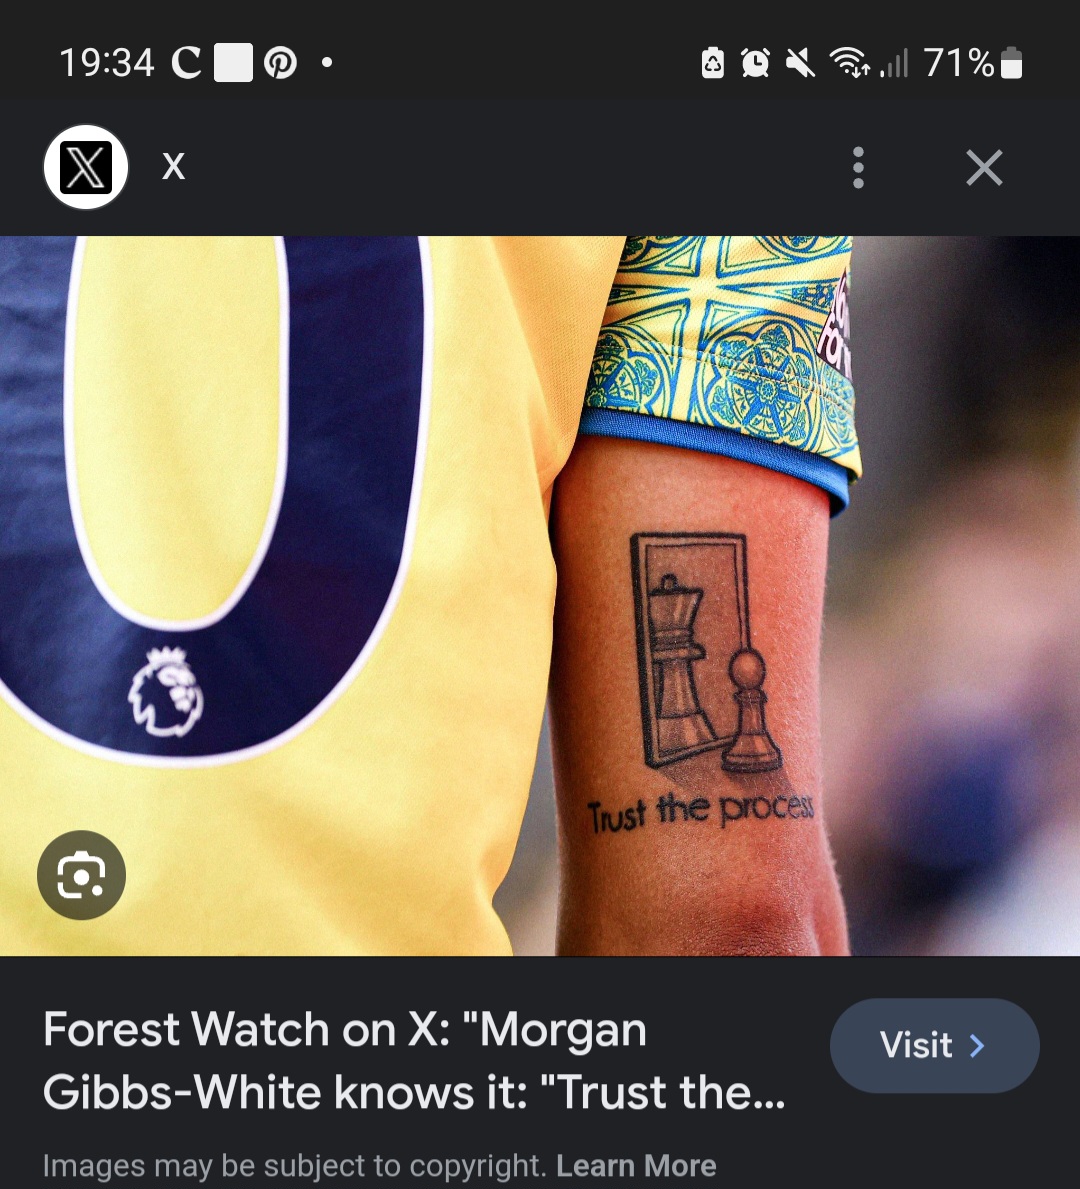 Premier league footballer scores the winner against Manchester United but reveals a CHESS tattoo! #chess #NottinghamForest